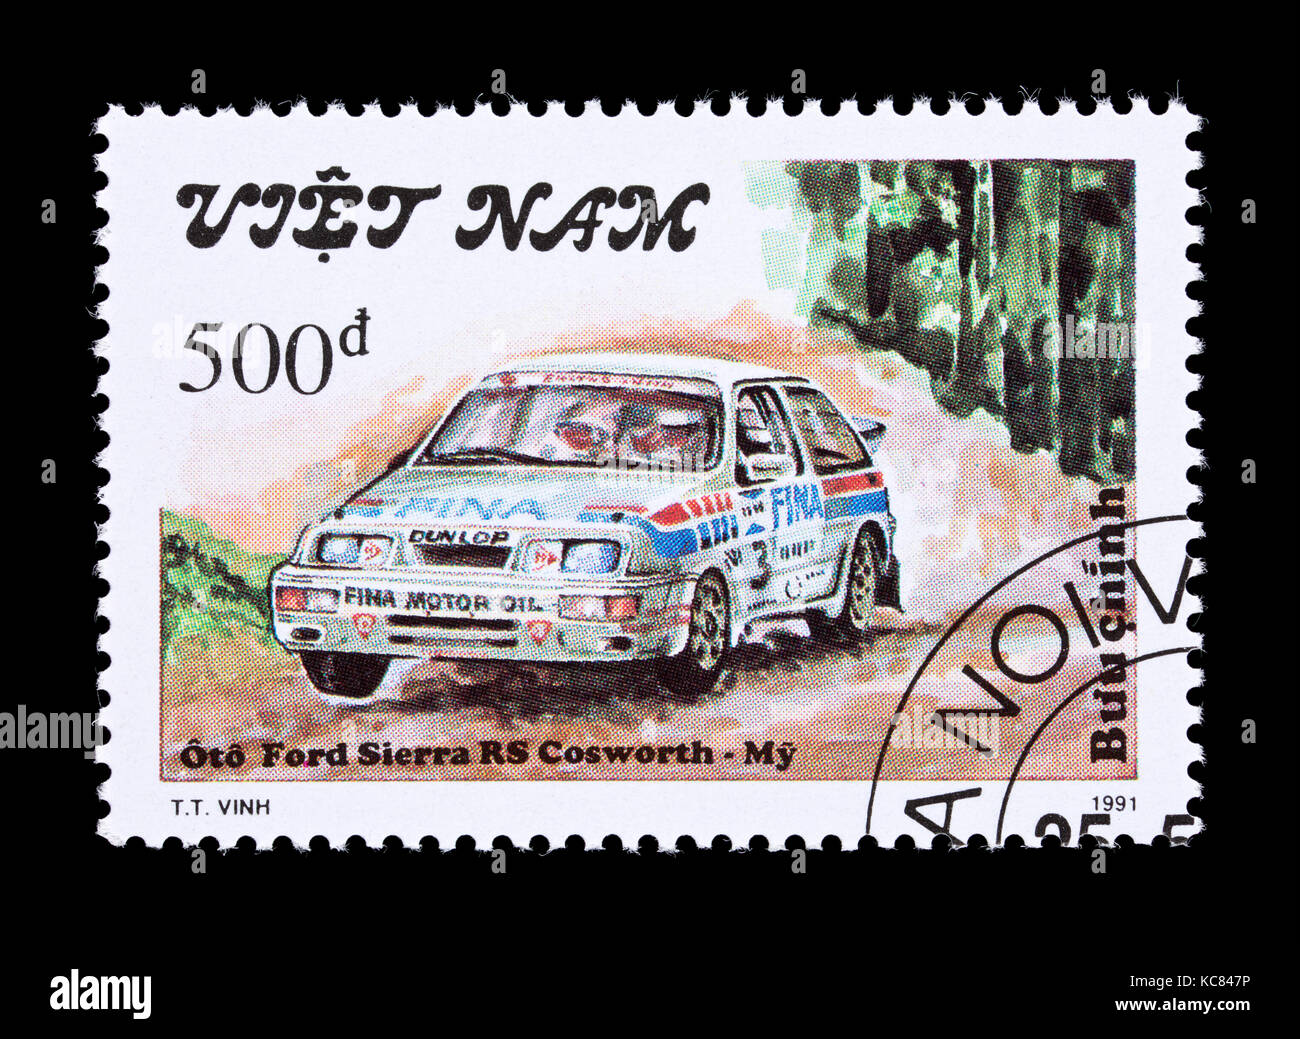 Francobollo dal Vietnam raffigurante una Ford Sierra Cosworth RS off-road rally car. Foto Stock